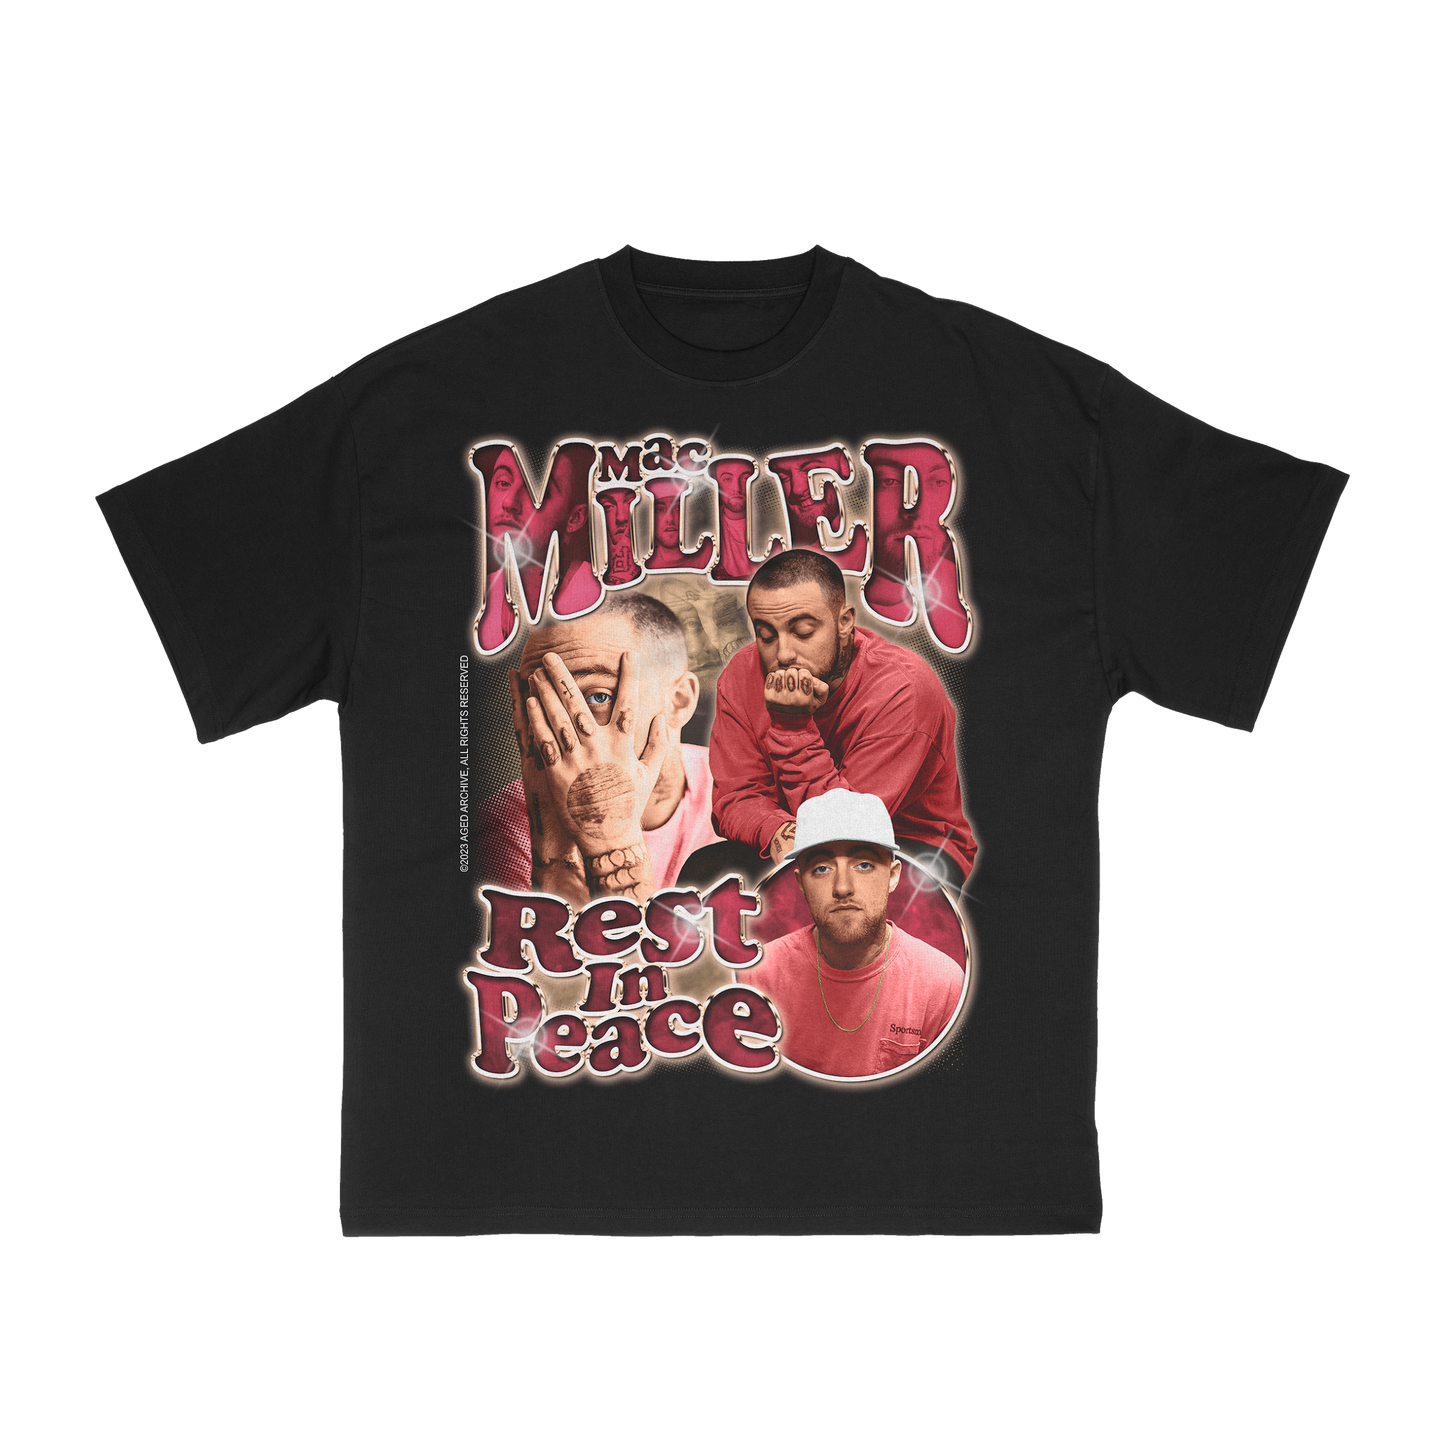 Camiseta Mac Miller